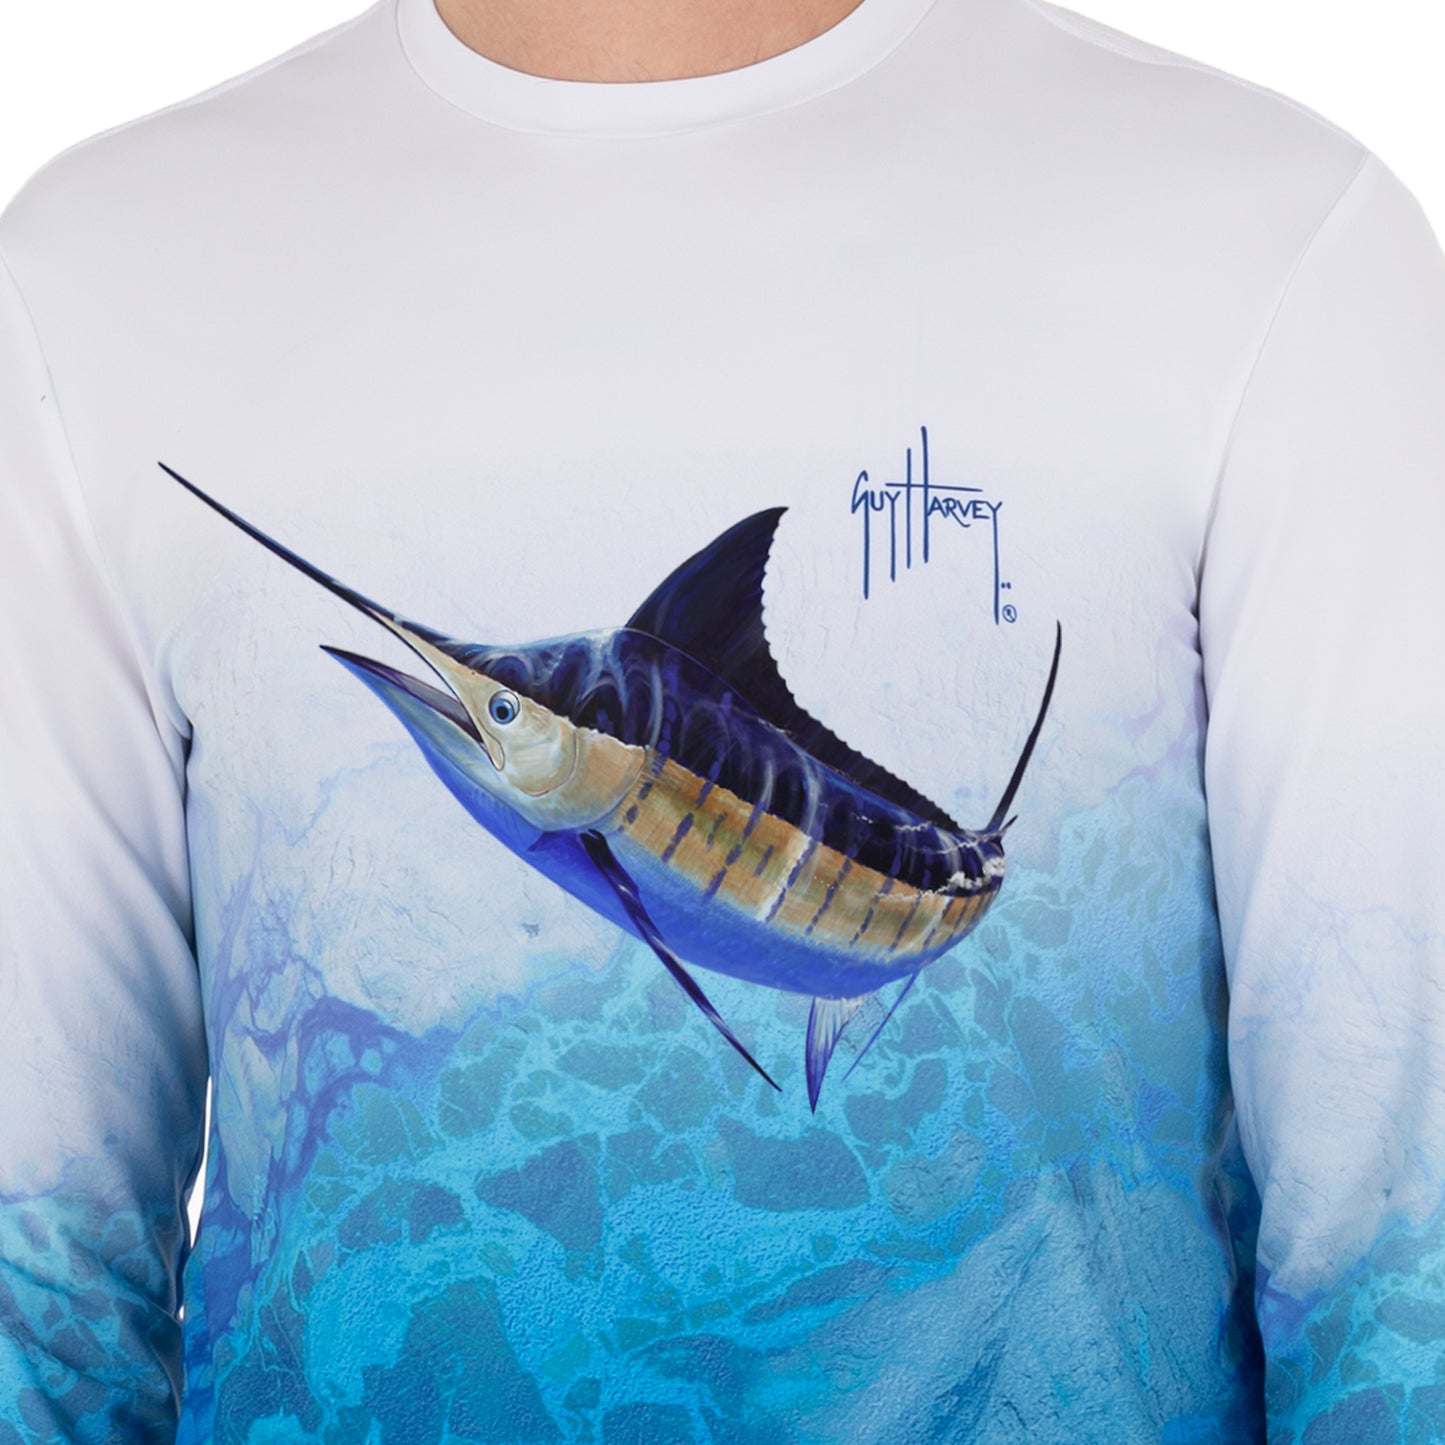 Men's Realtree Camo Marlin Light Sun Protection Long Sleeve Shirt